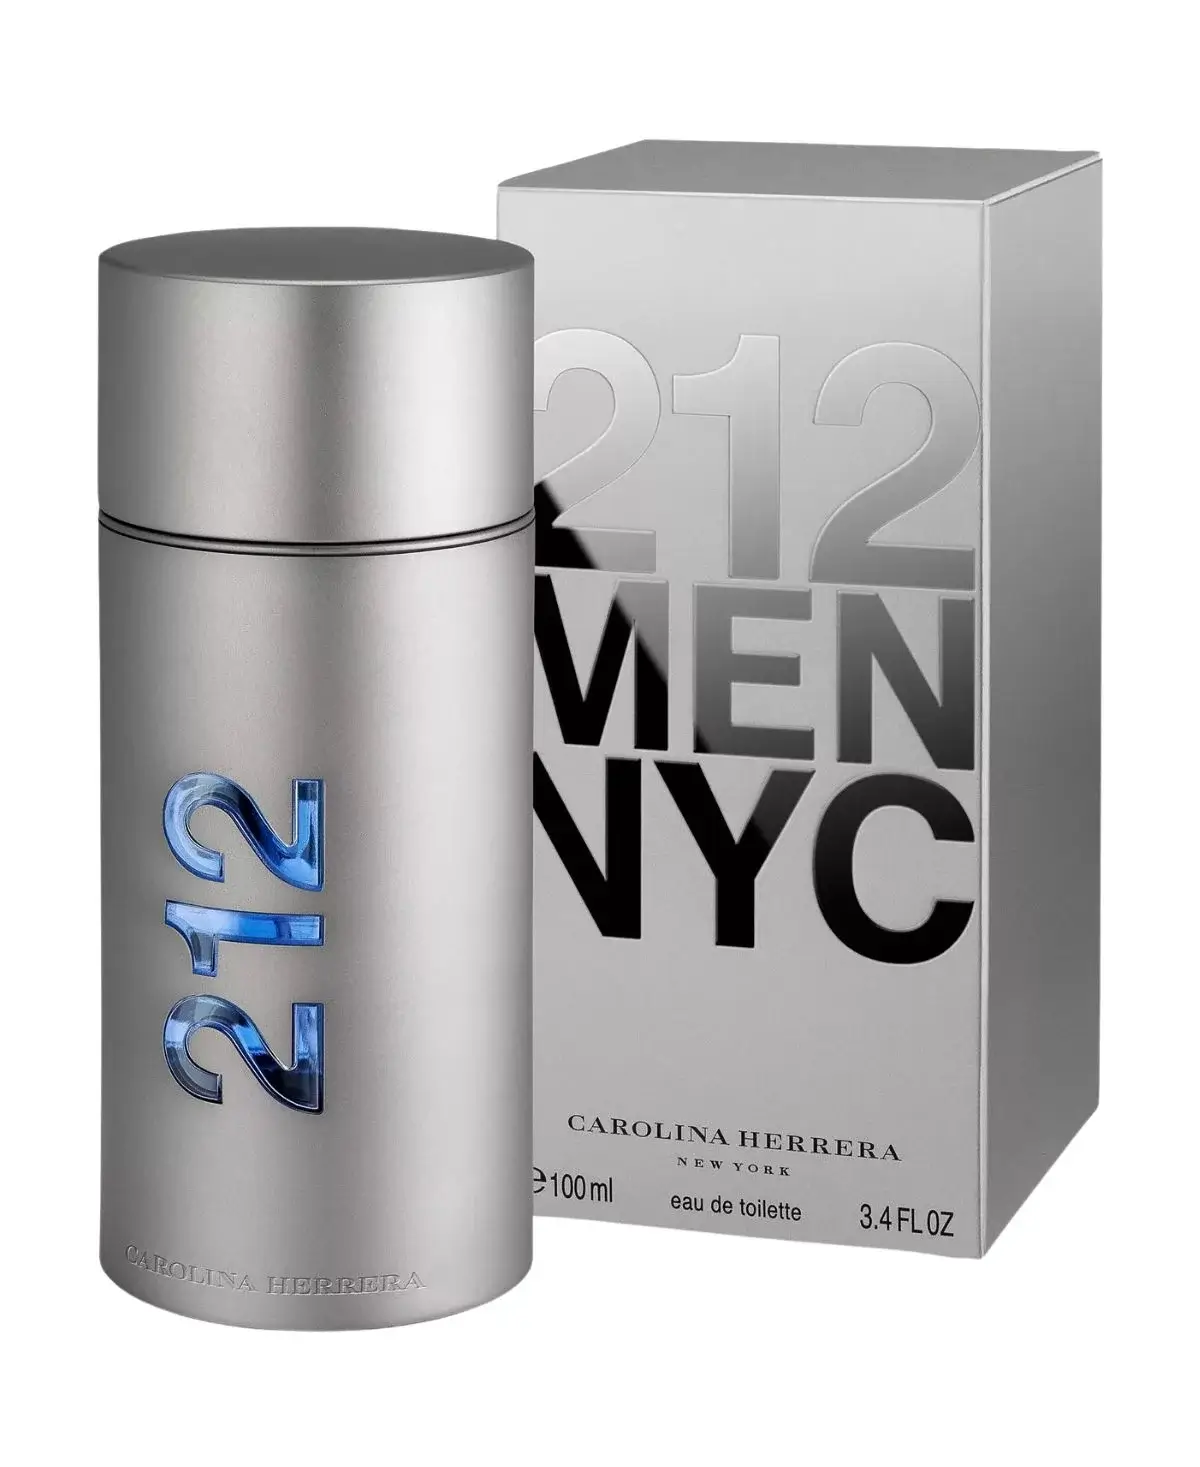 Carolina Herrera 212 Men NYC for Men Eau de Toilette (EDT) Spray 3.4 oz (100 ml) 8411061043868